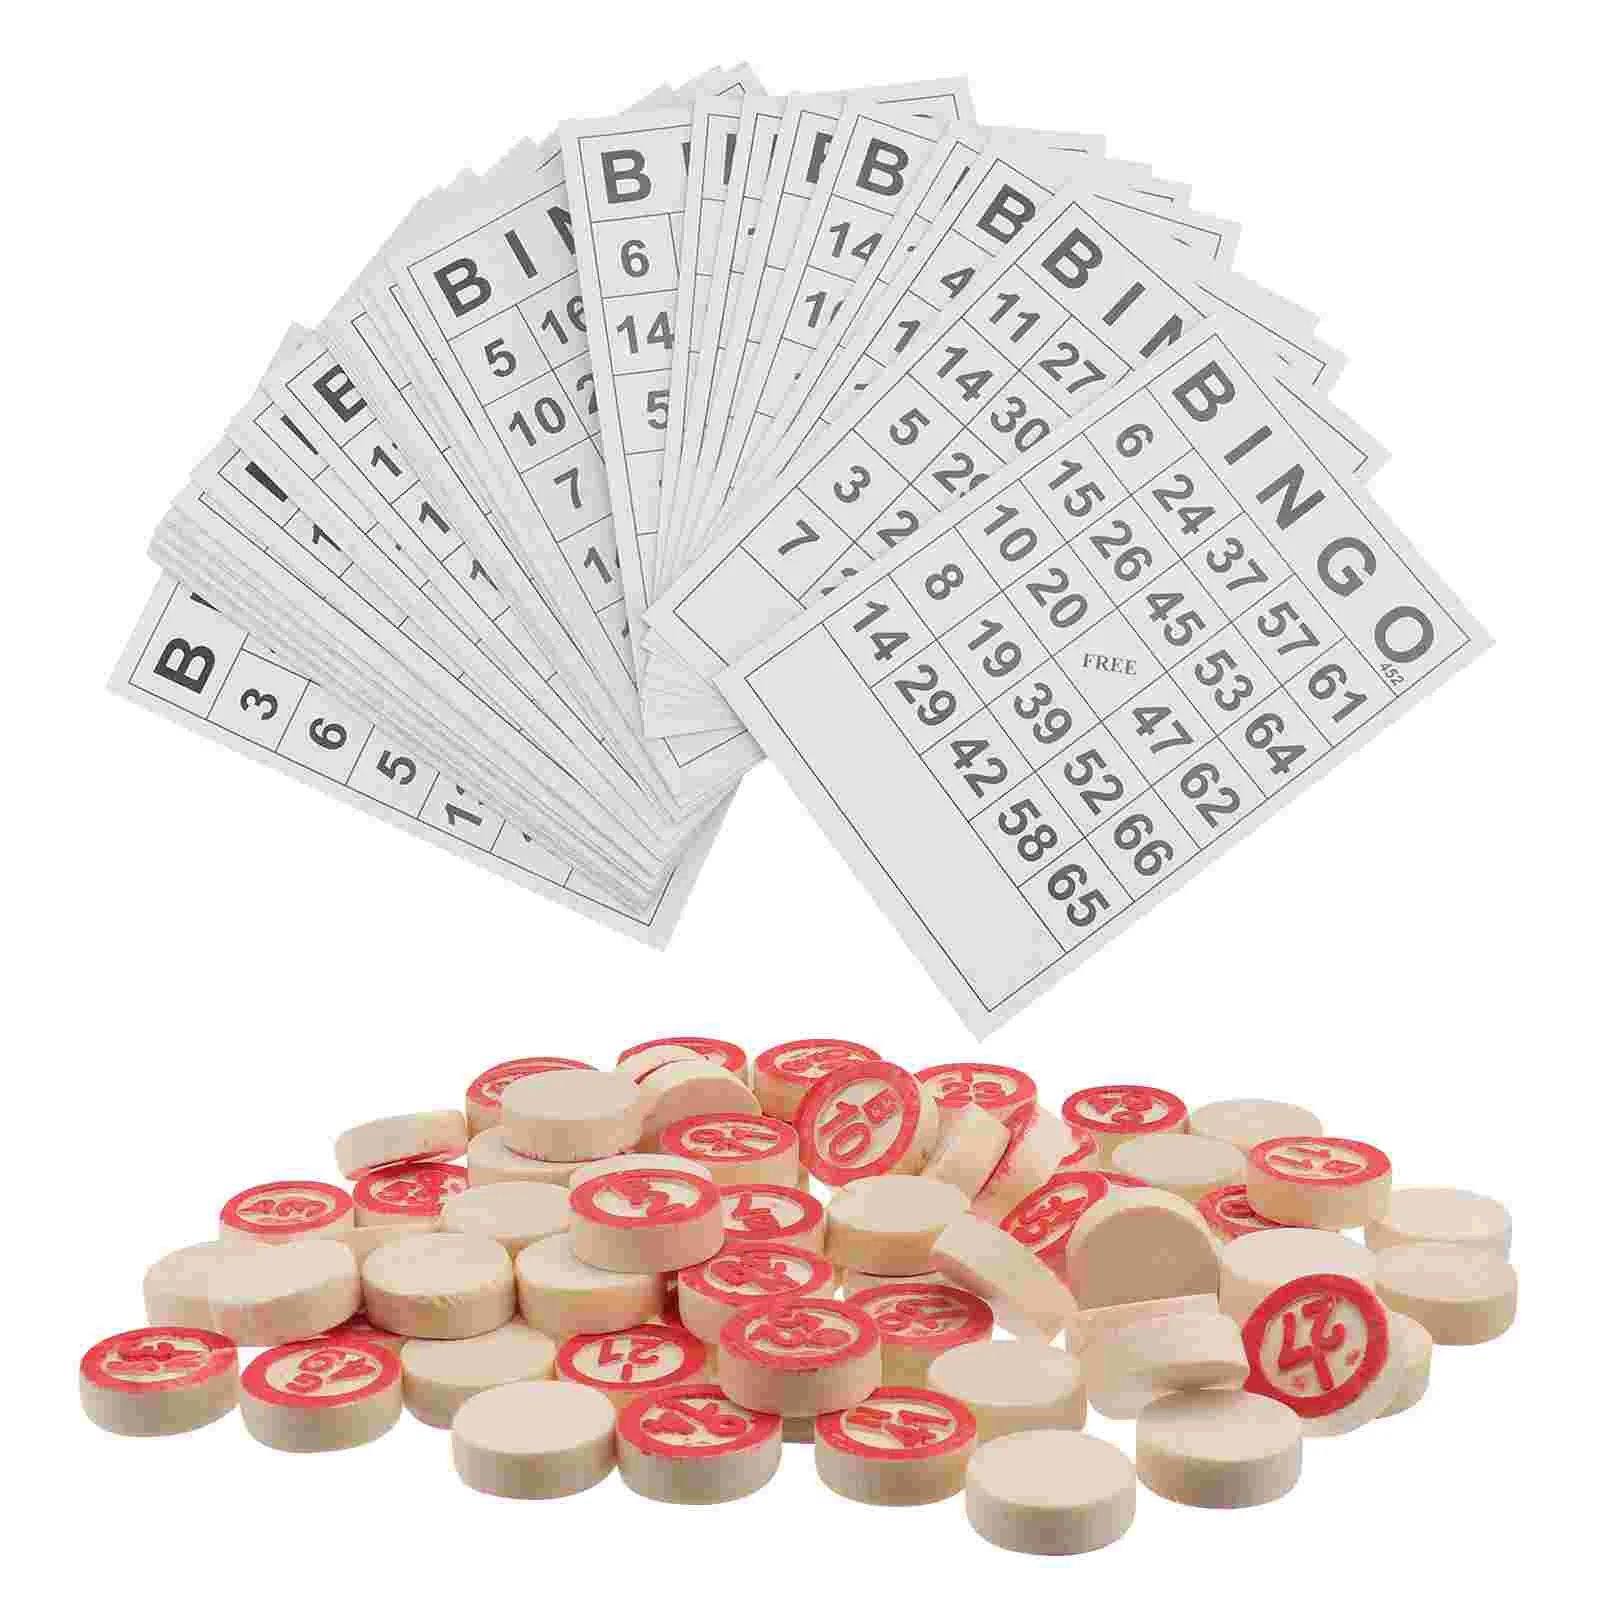 

Bingo Game Kids Educational Toys Wood Barrels Bingo Lotto Board Game Number Bingo Cards Wooden Party Bingo Toy Child